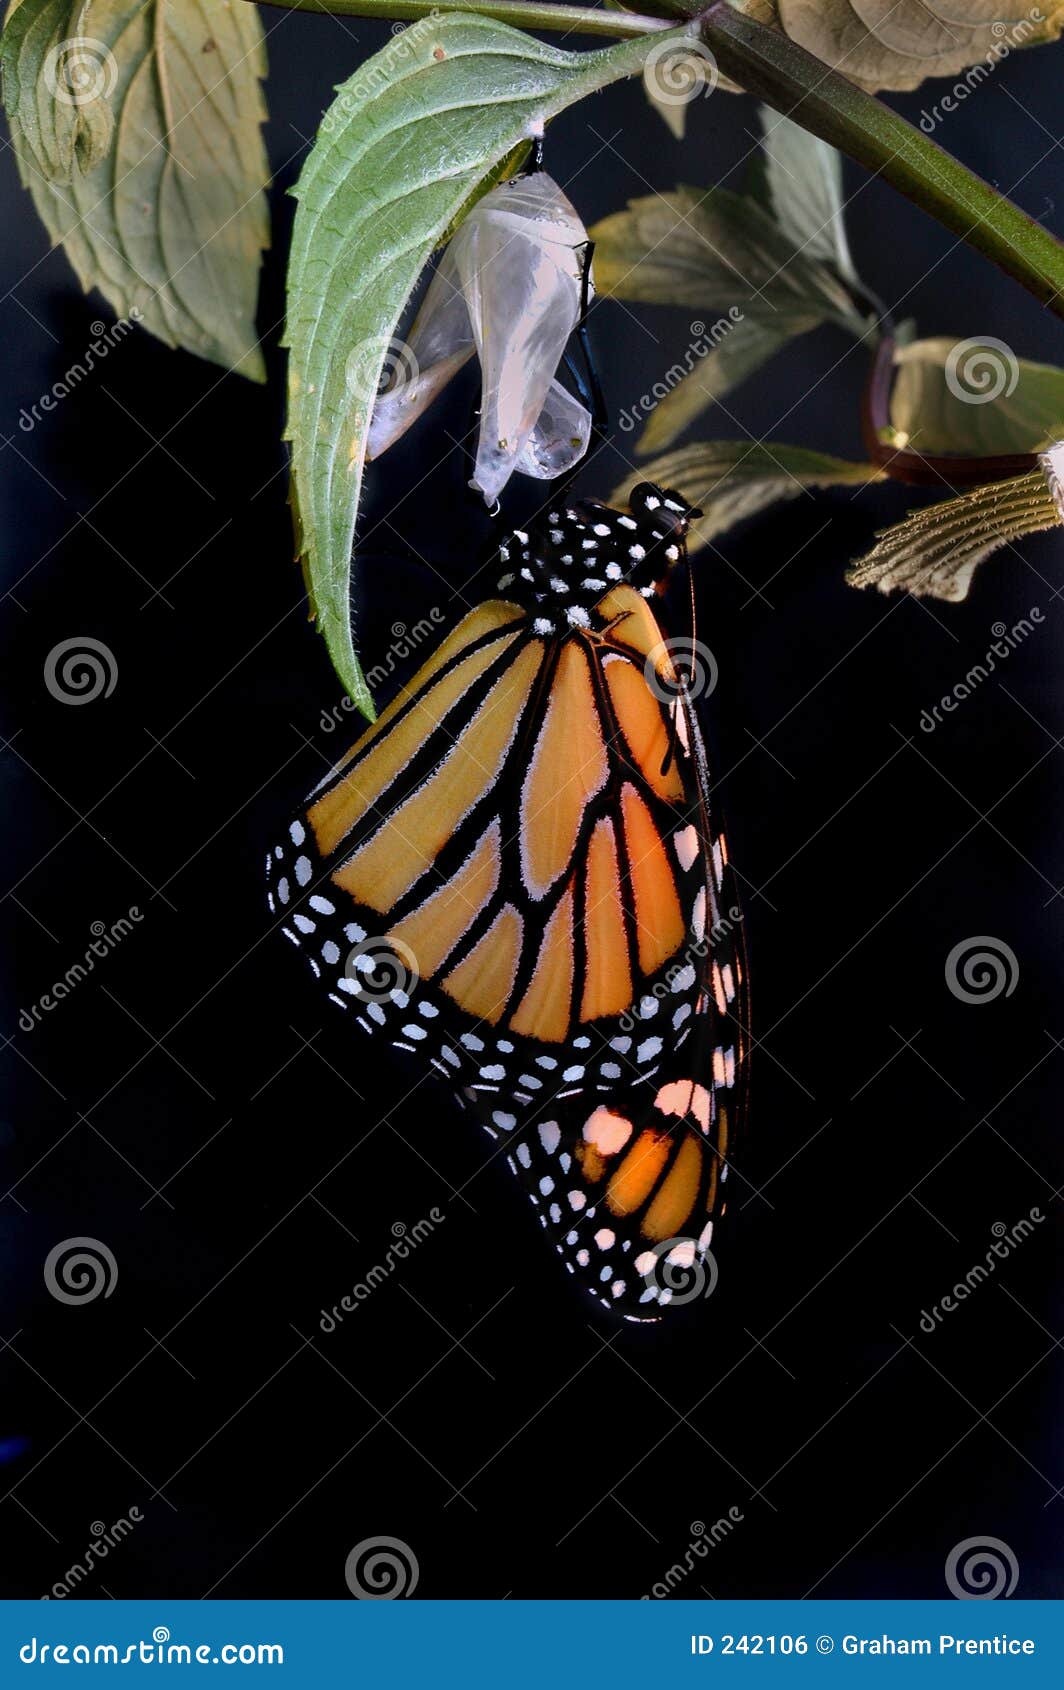 emerging monarch